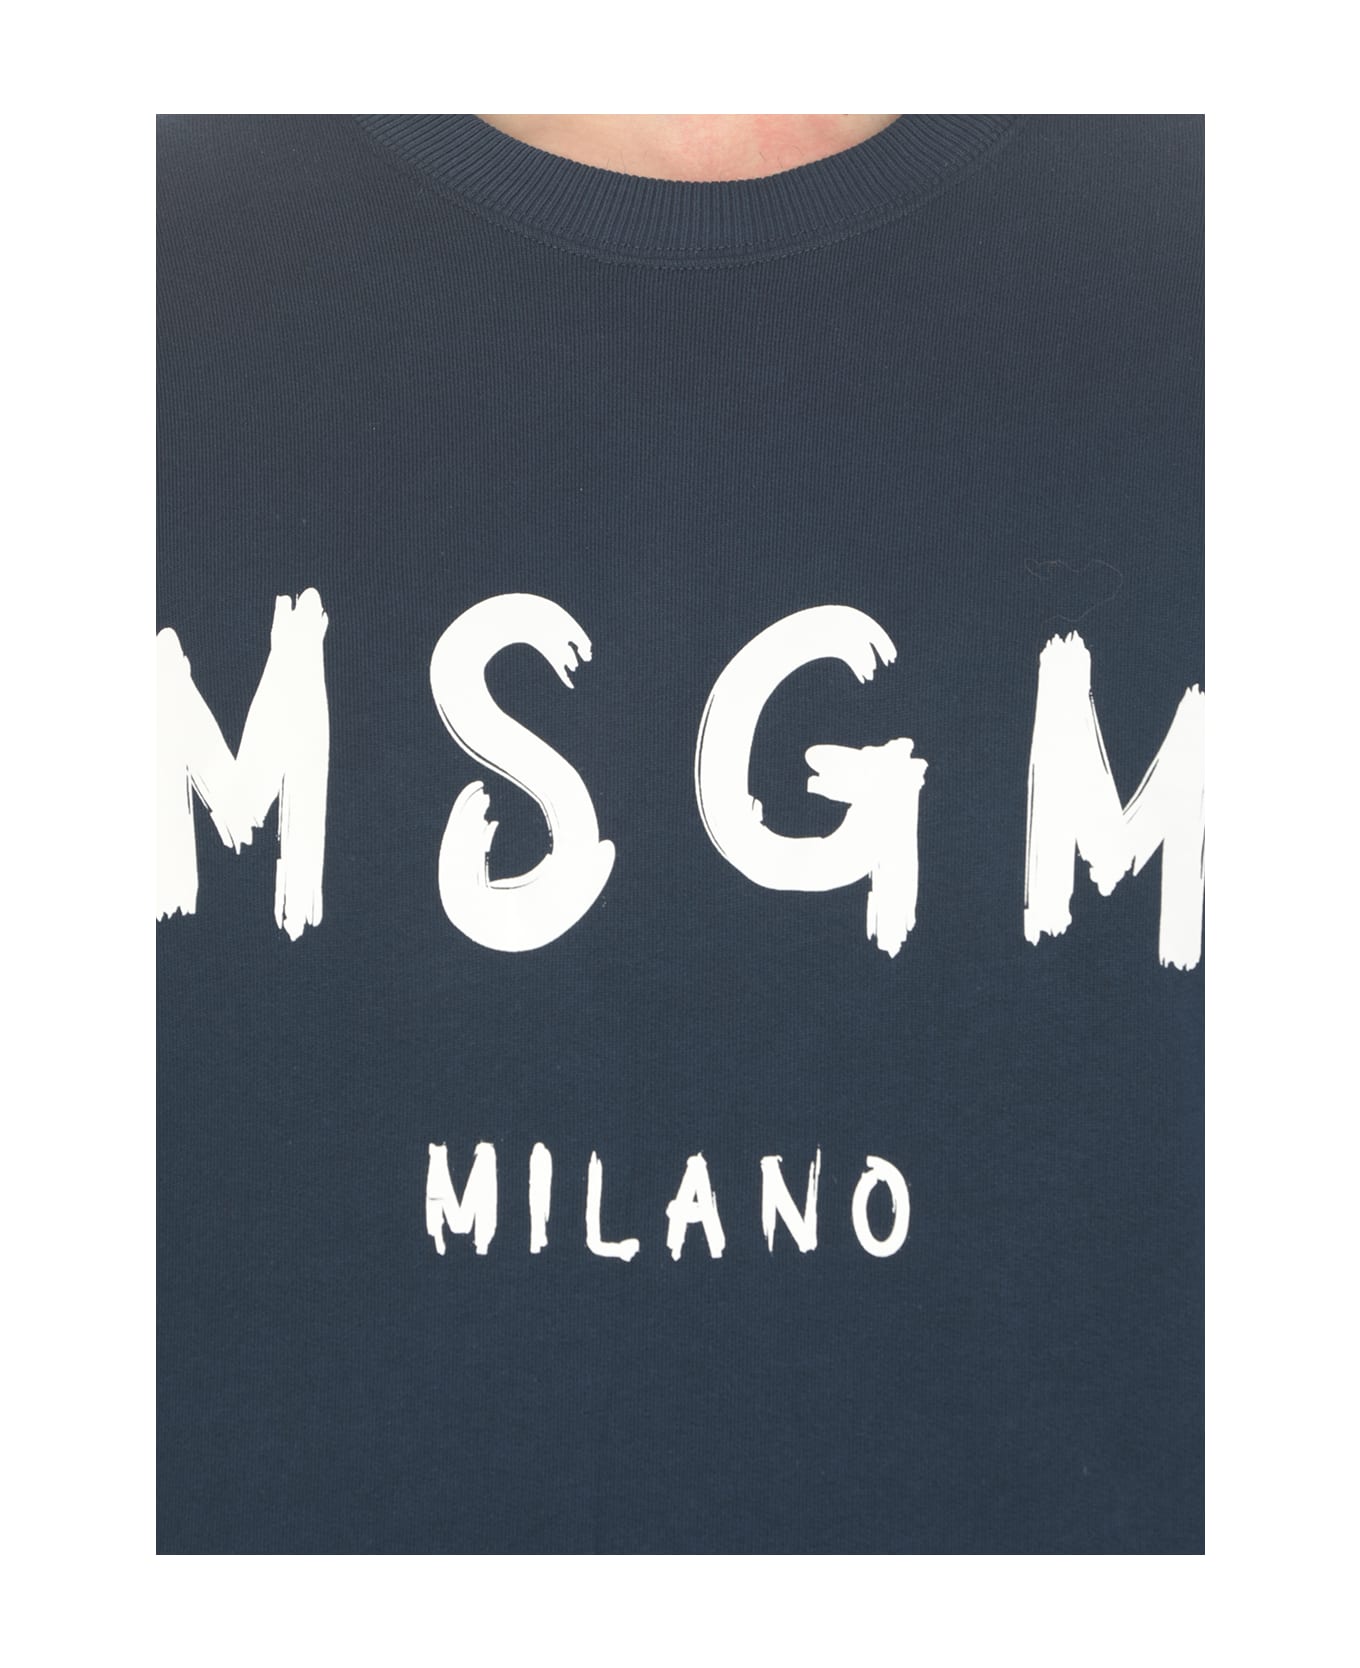 MSGM Sweatshirt With Logo - Blue